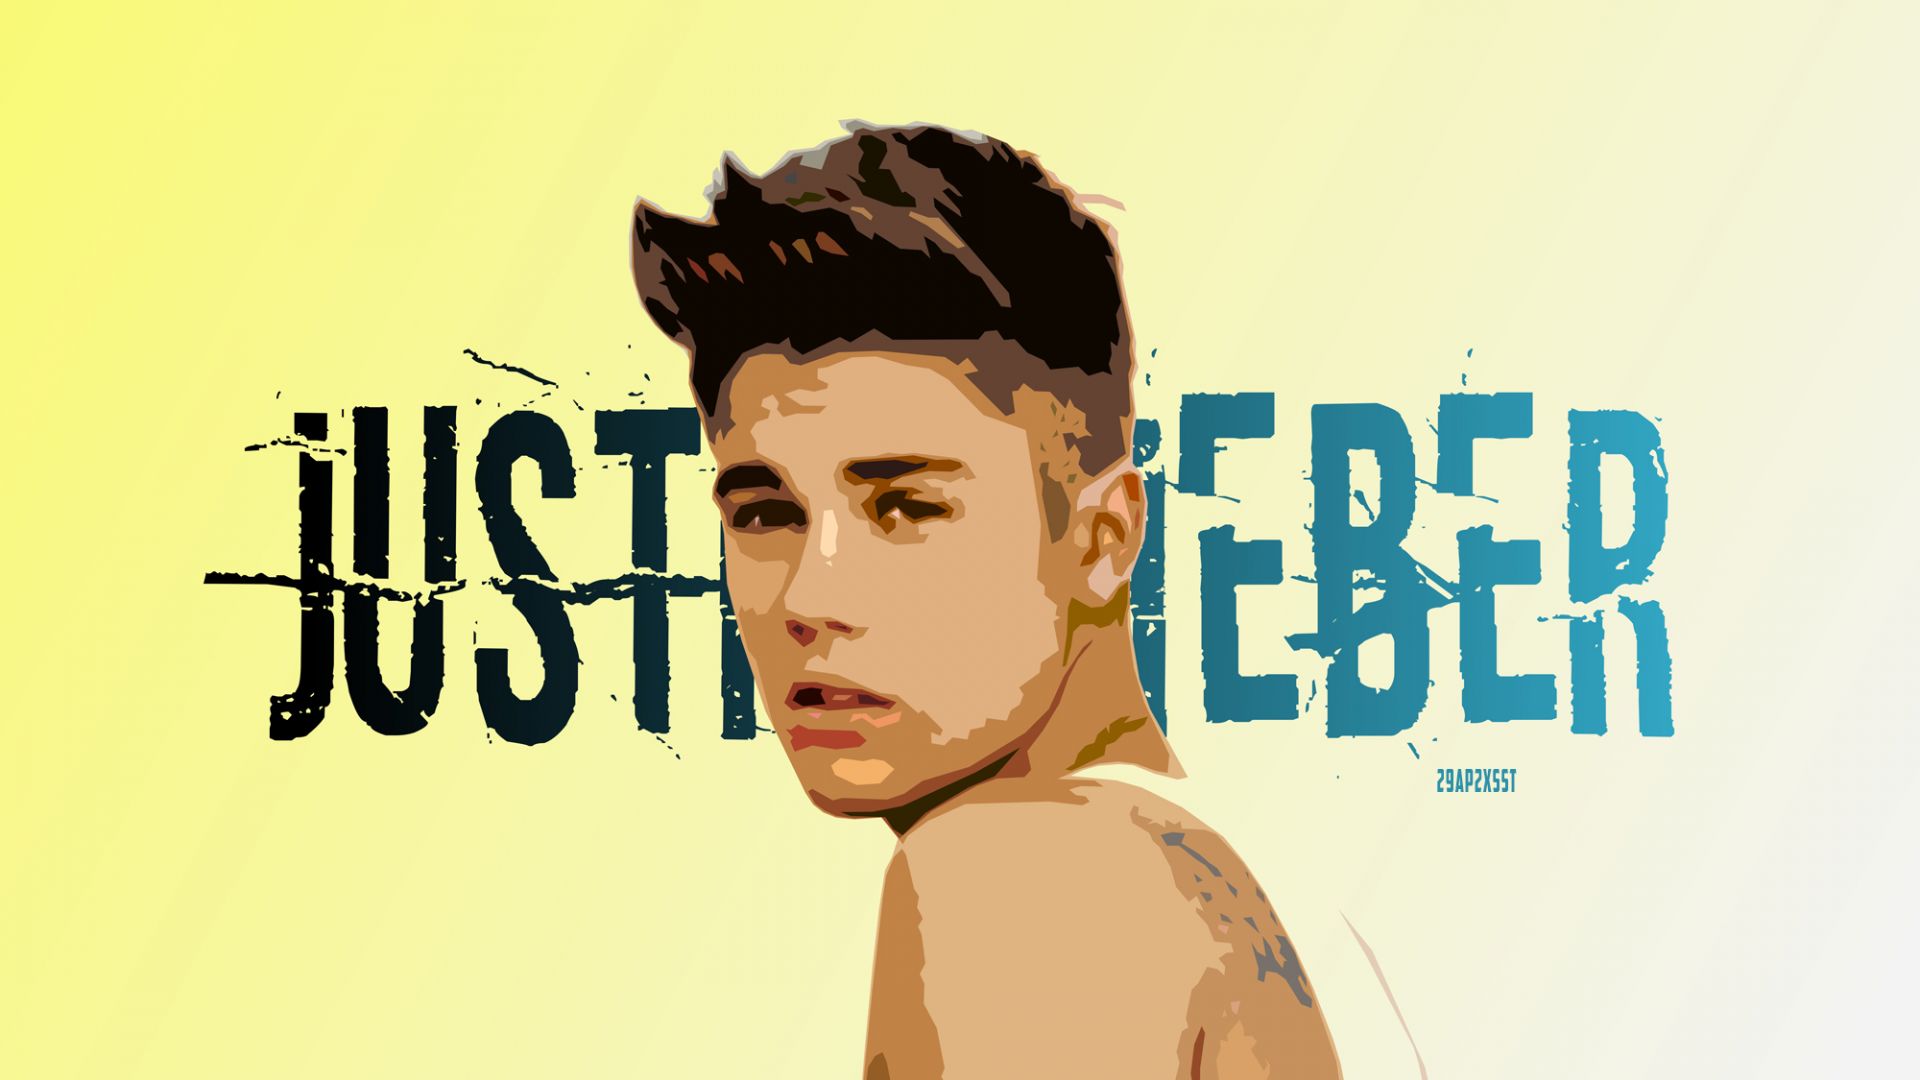 Wallpaper Art, Justin Bieber, singer